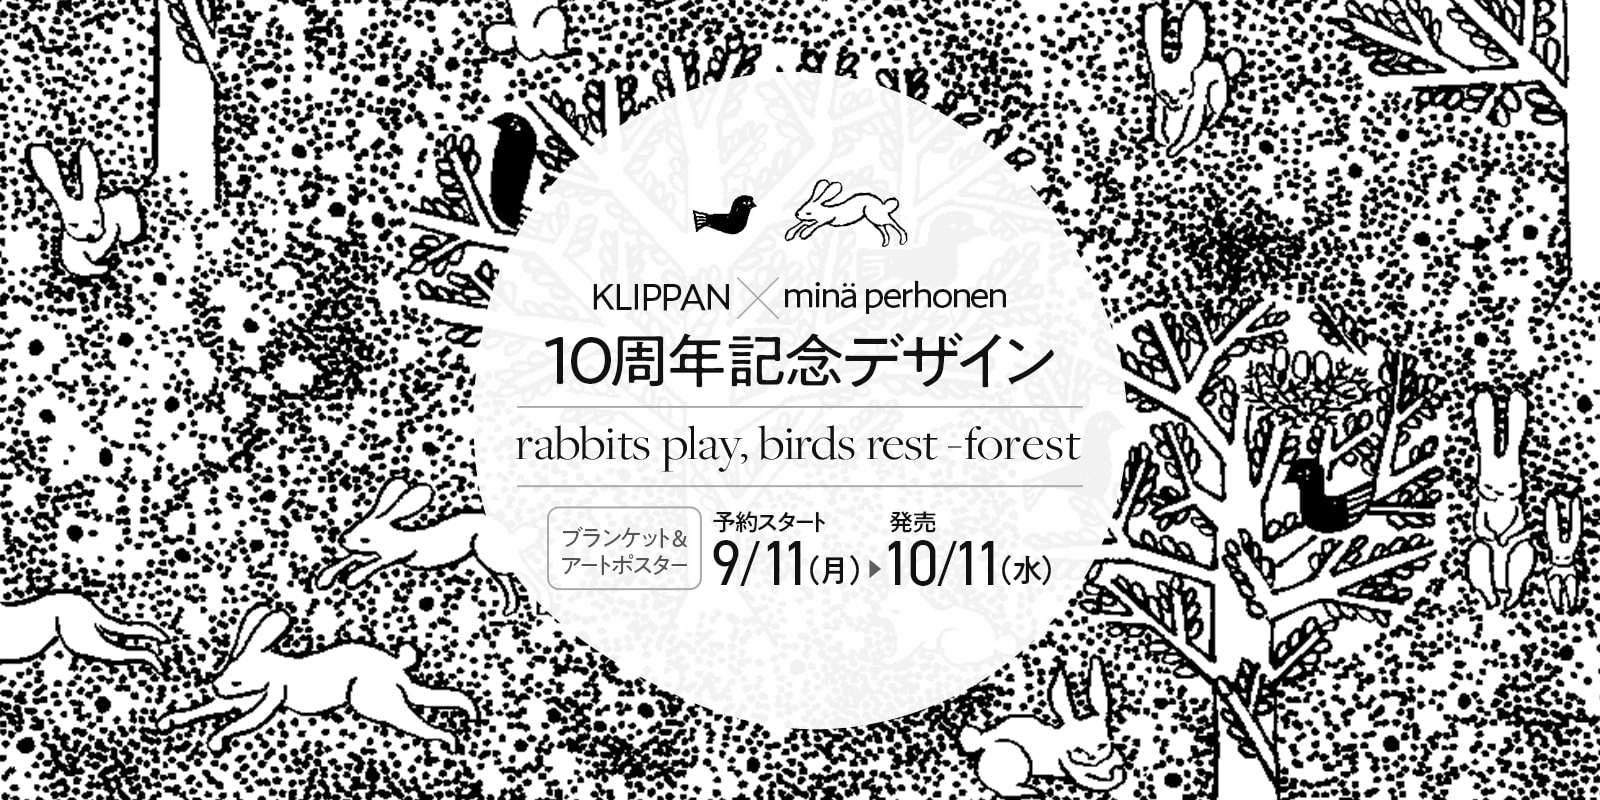 KLIPPAN×minä perhonen 10周年記念デザイン “rabbits play, birds rest - forest”